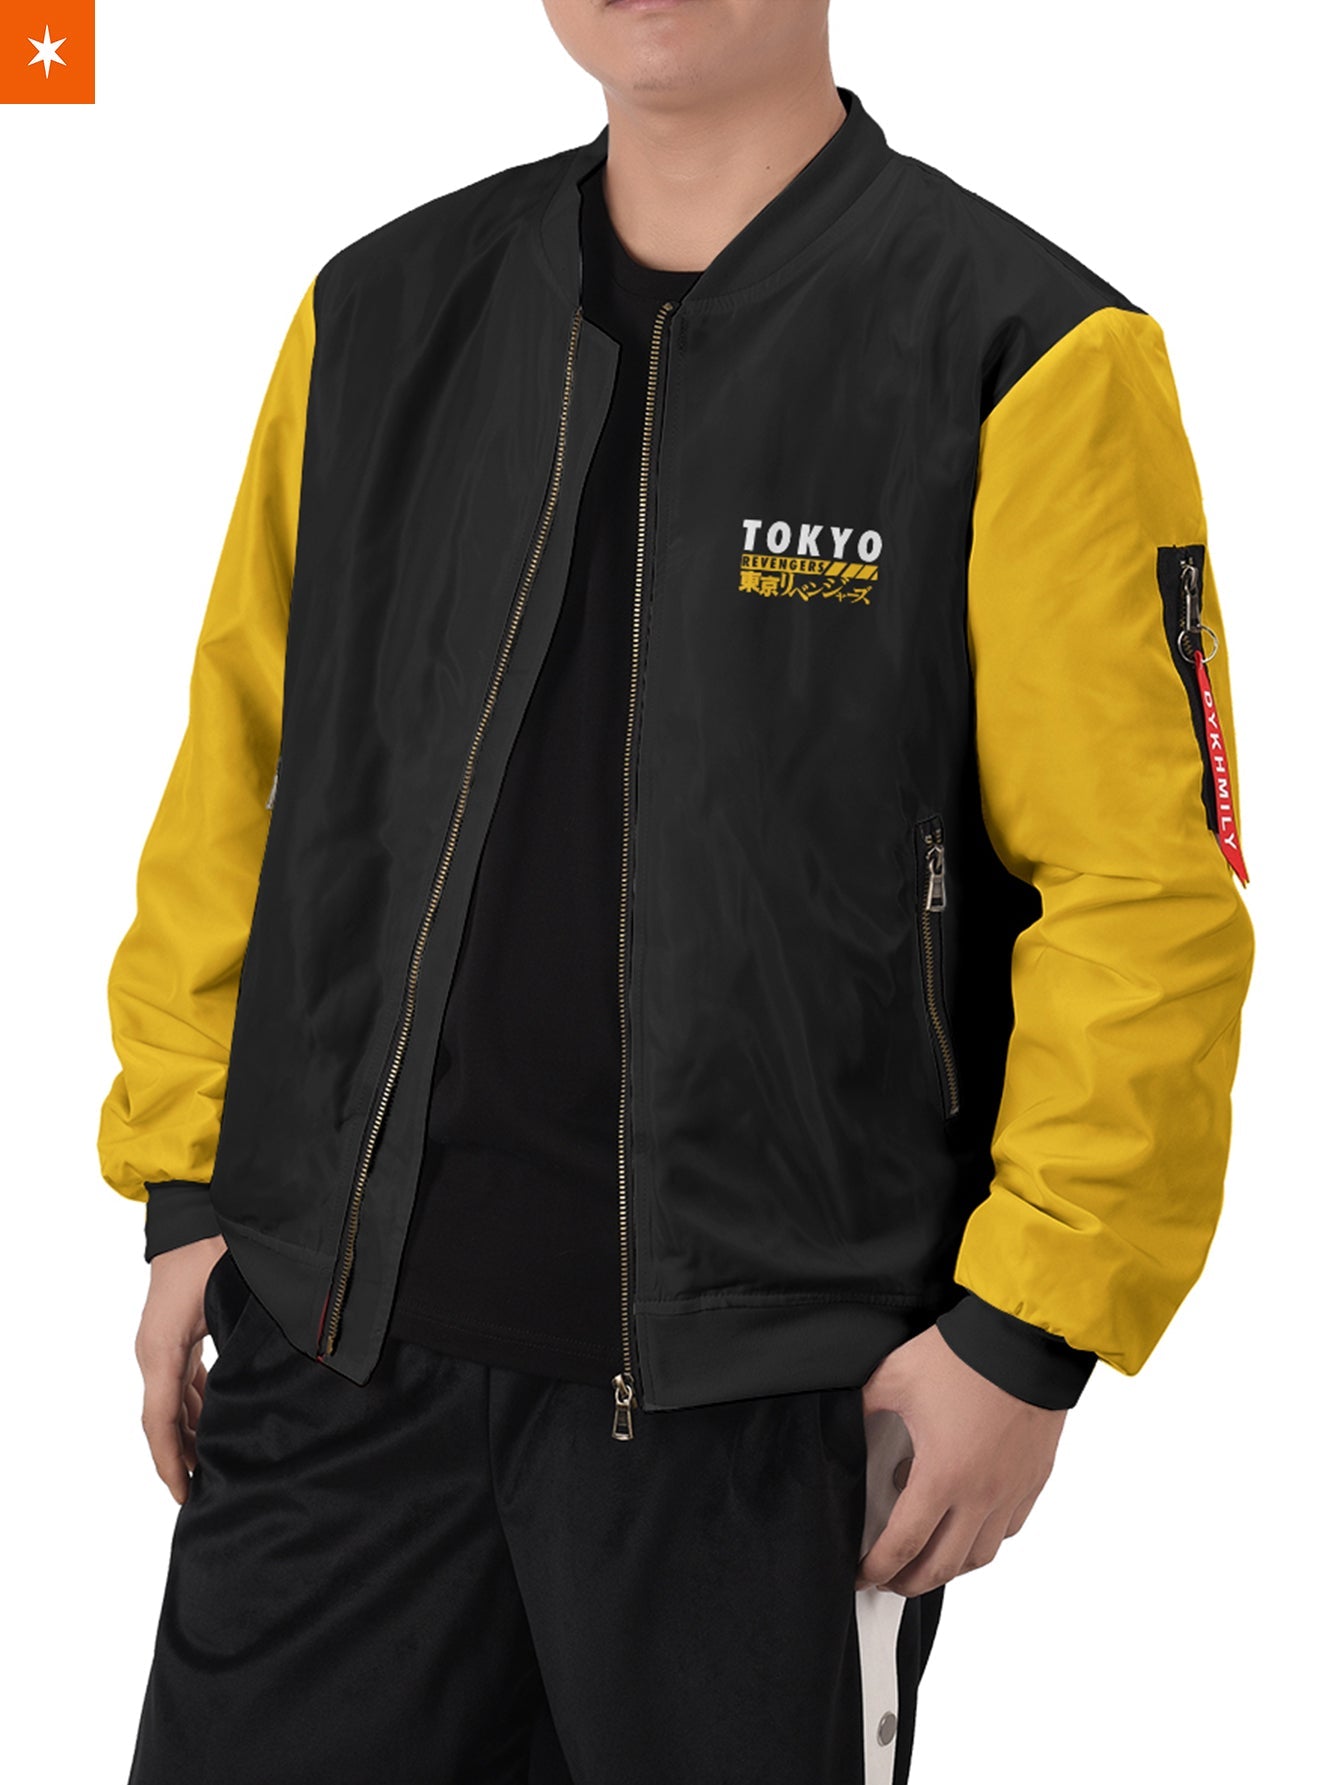 Fandomaniax - Draken Mikey Stwear Bomber Jacket